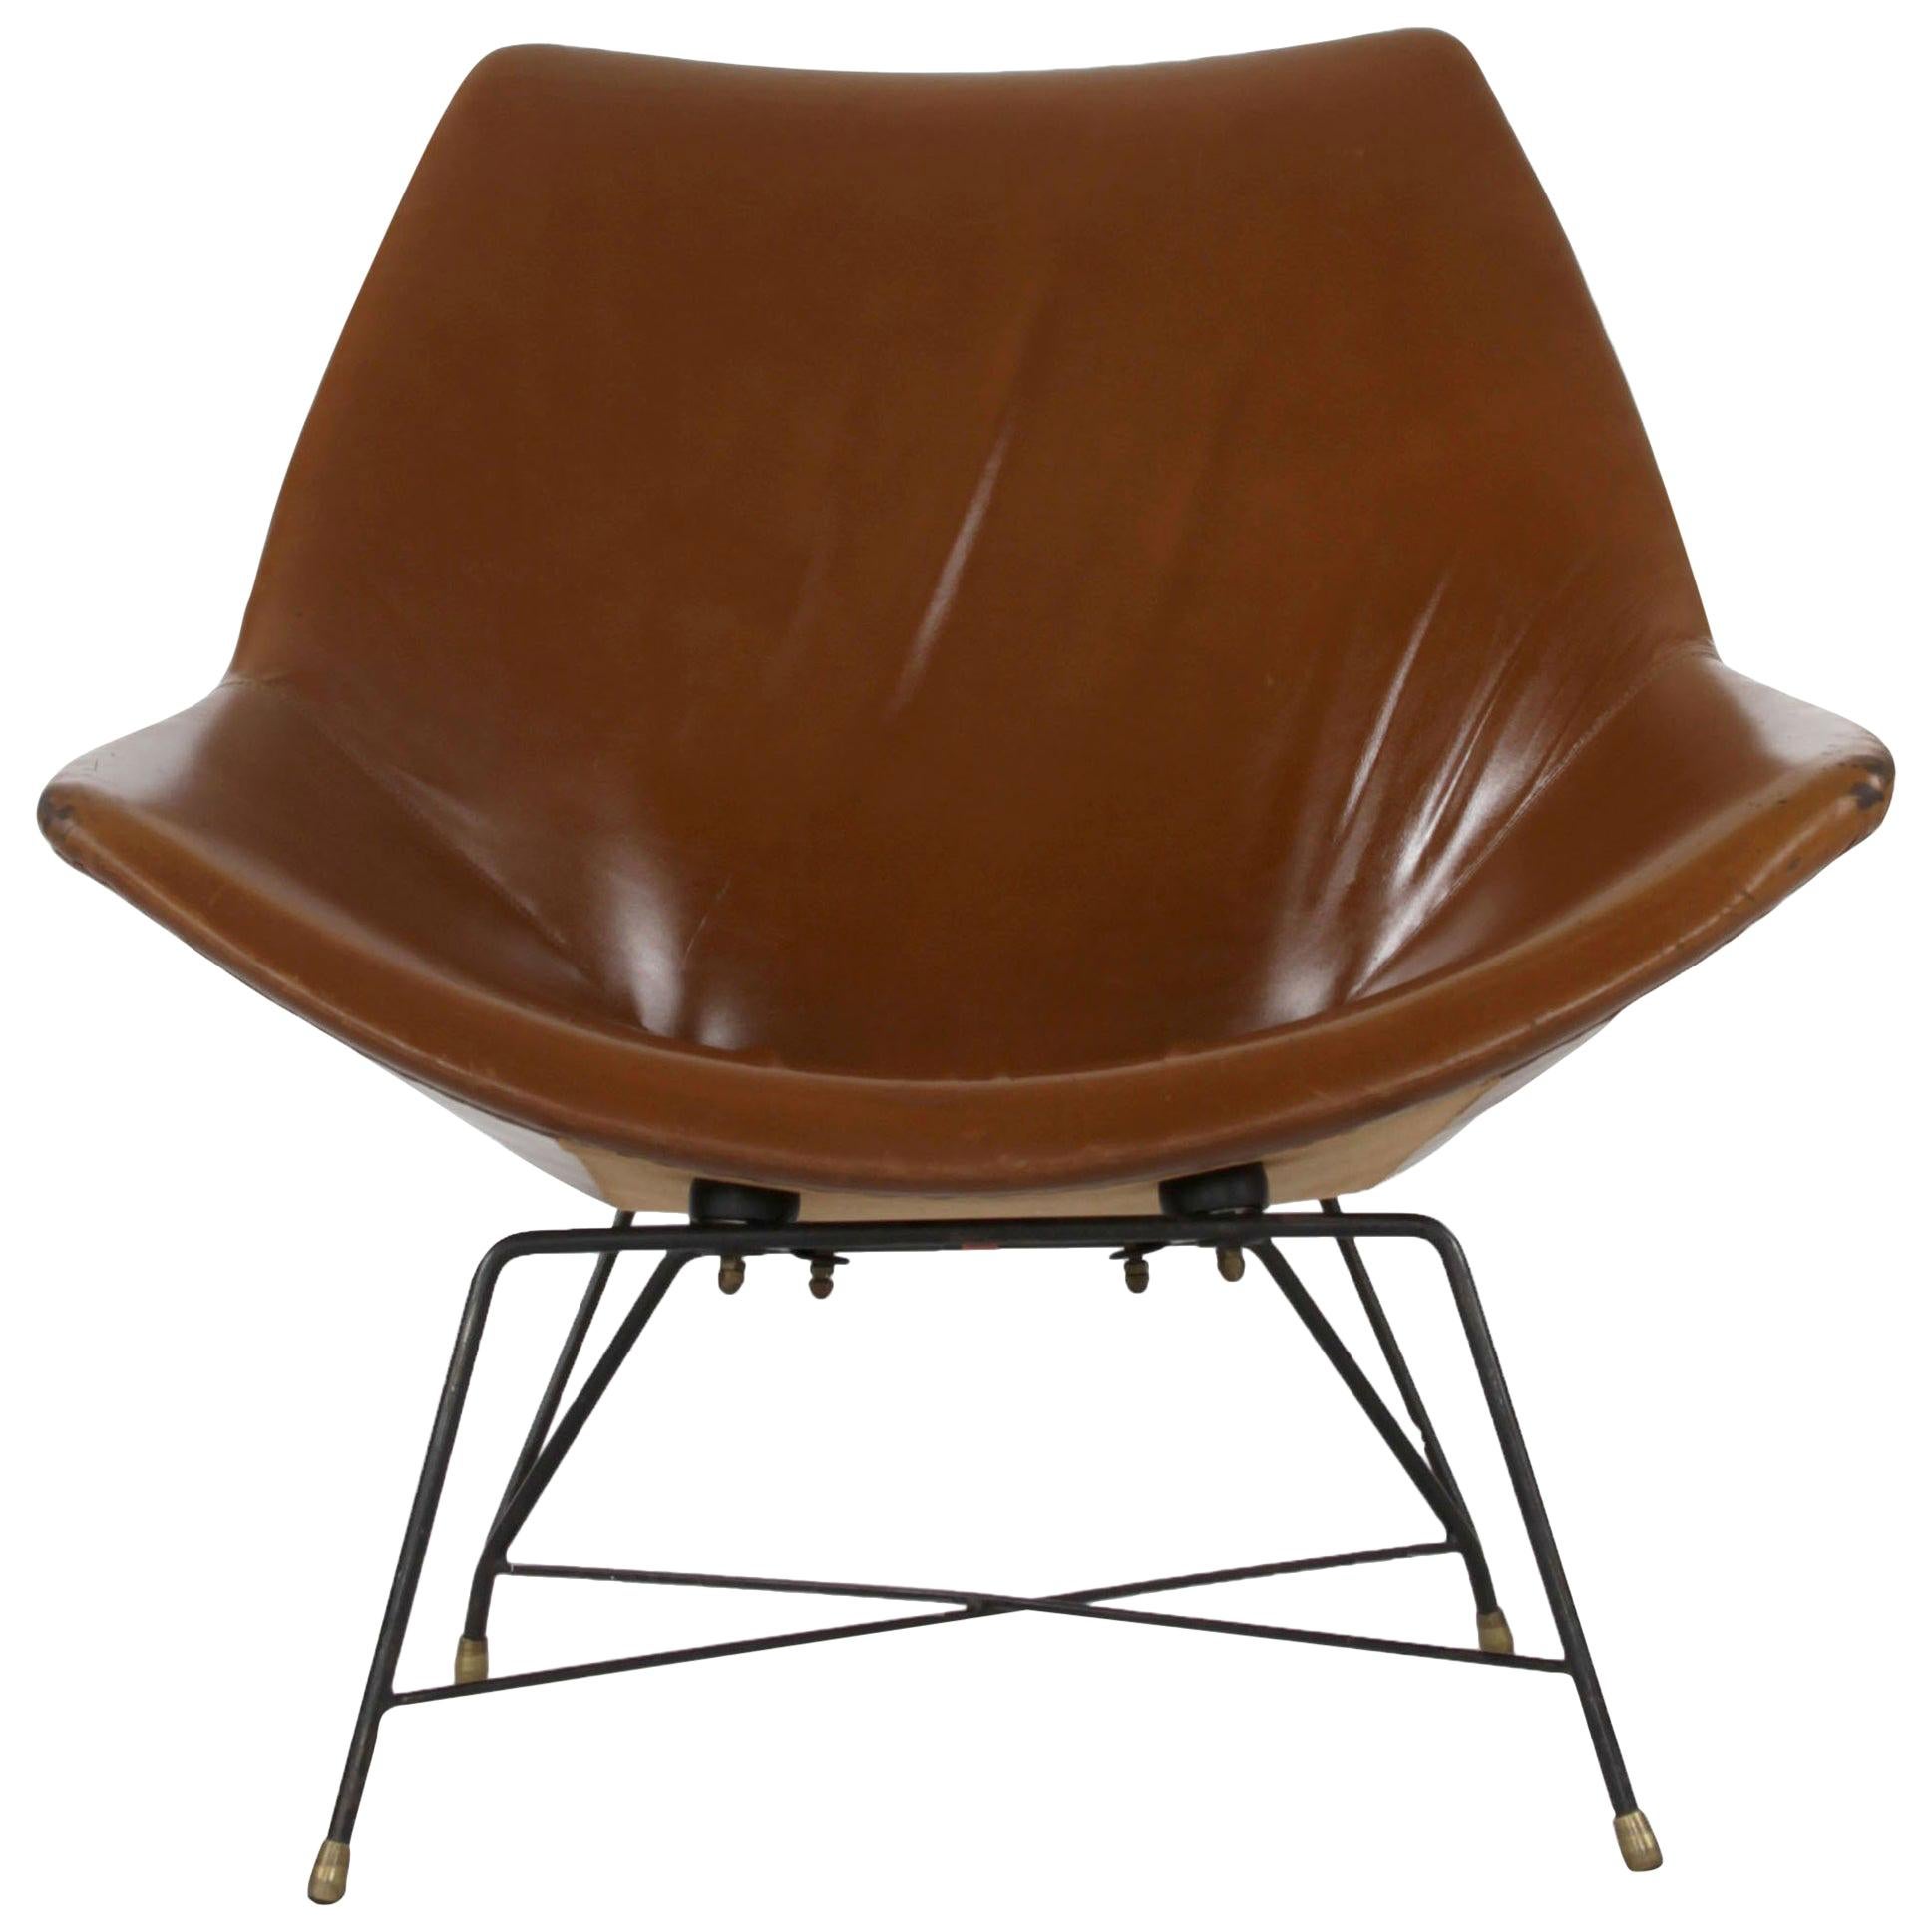 Italian Brown Leather Kosmos Chair Design by Augusto Bozzi for Saporiti, 1954